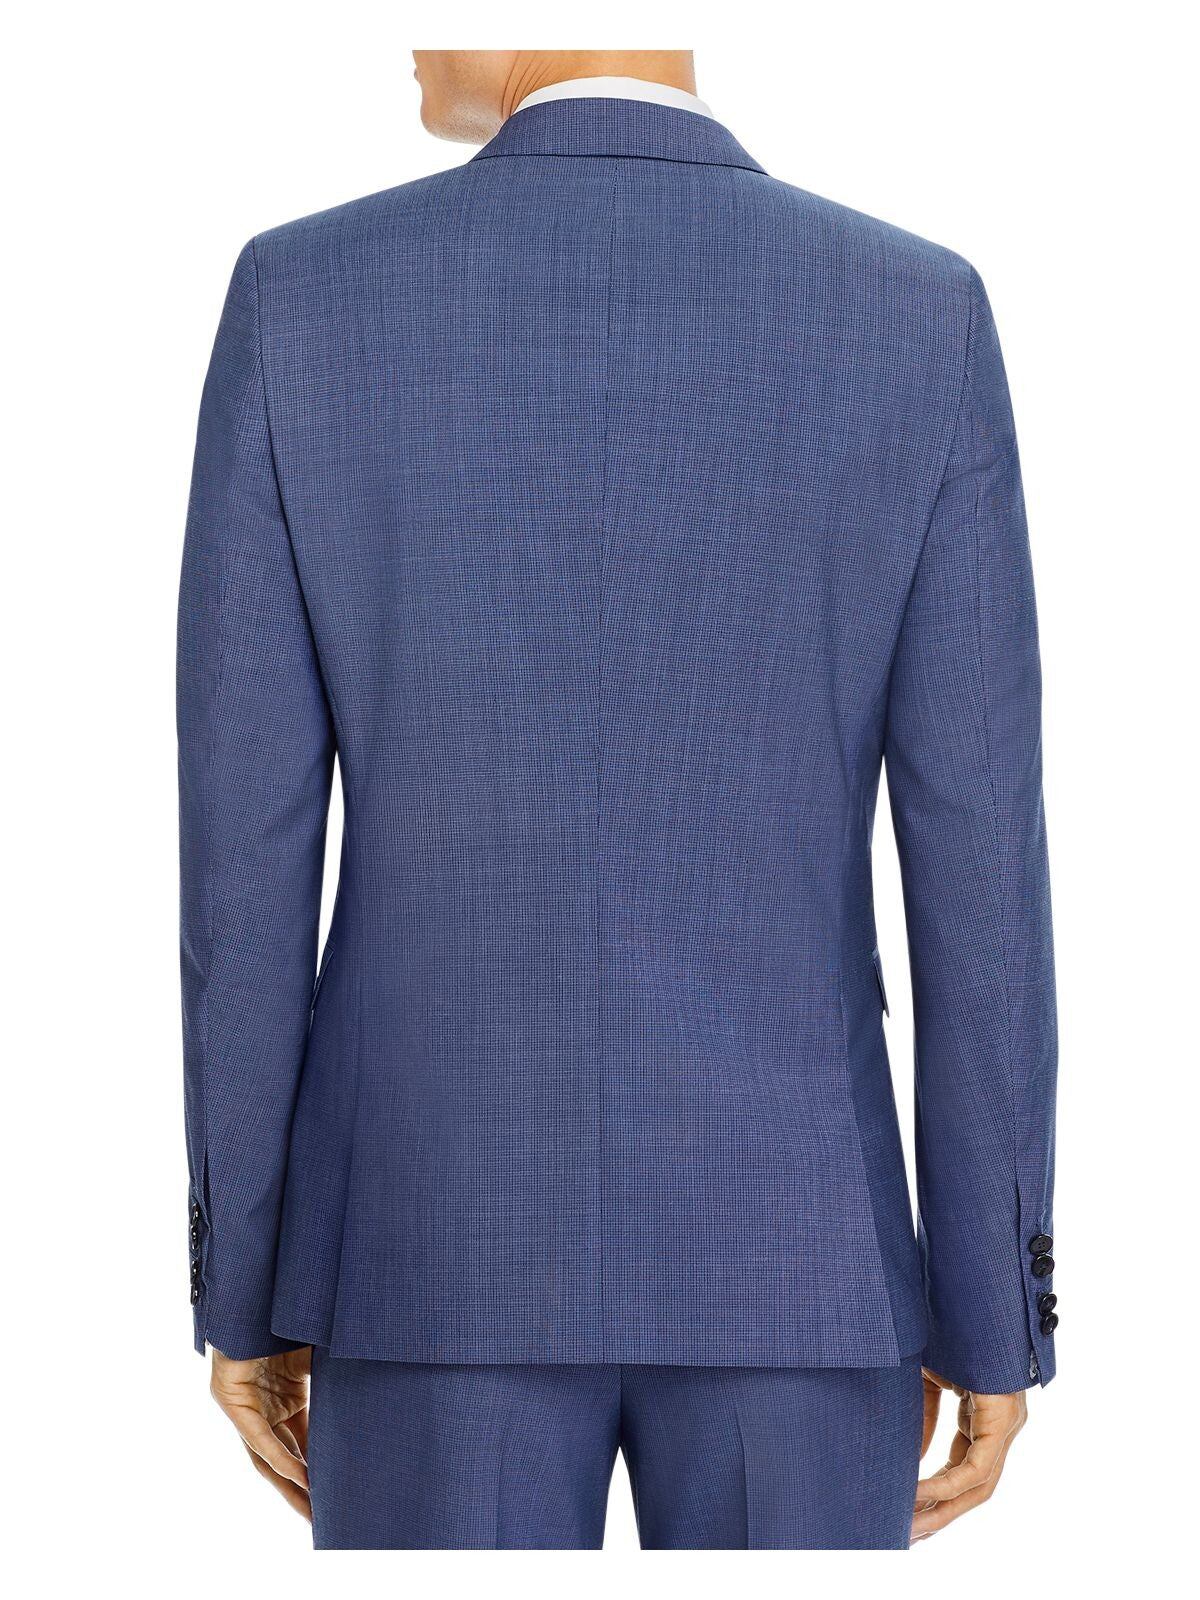 HUGO BOSS Mens Blue Single Breasted, Wool Blend Suit Jacket 38R